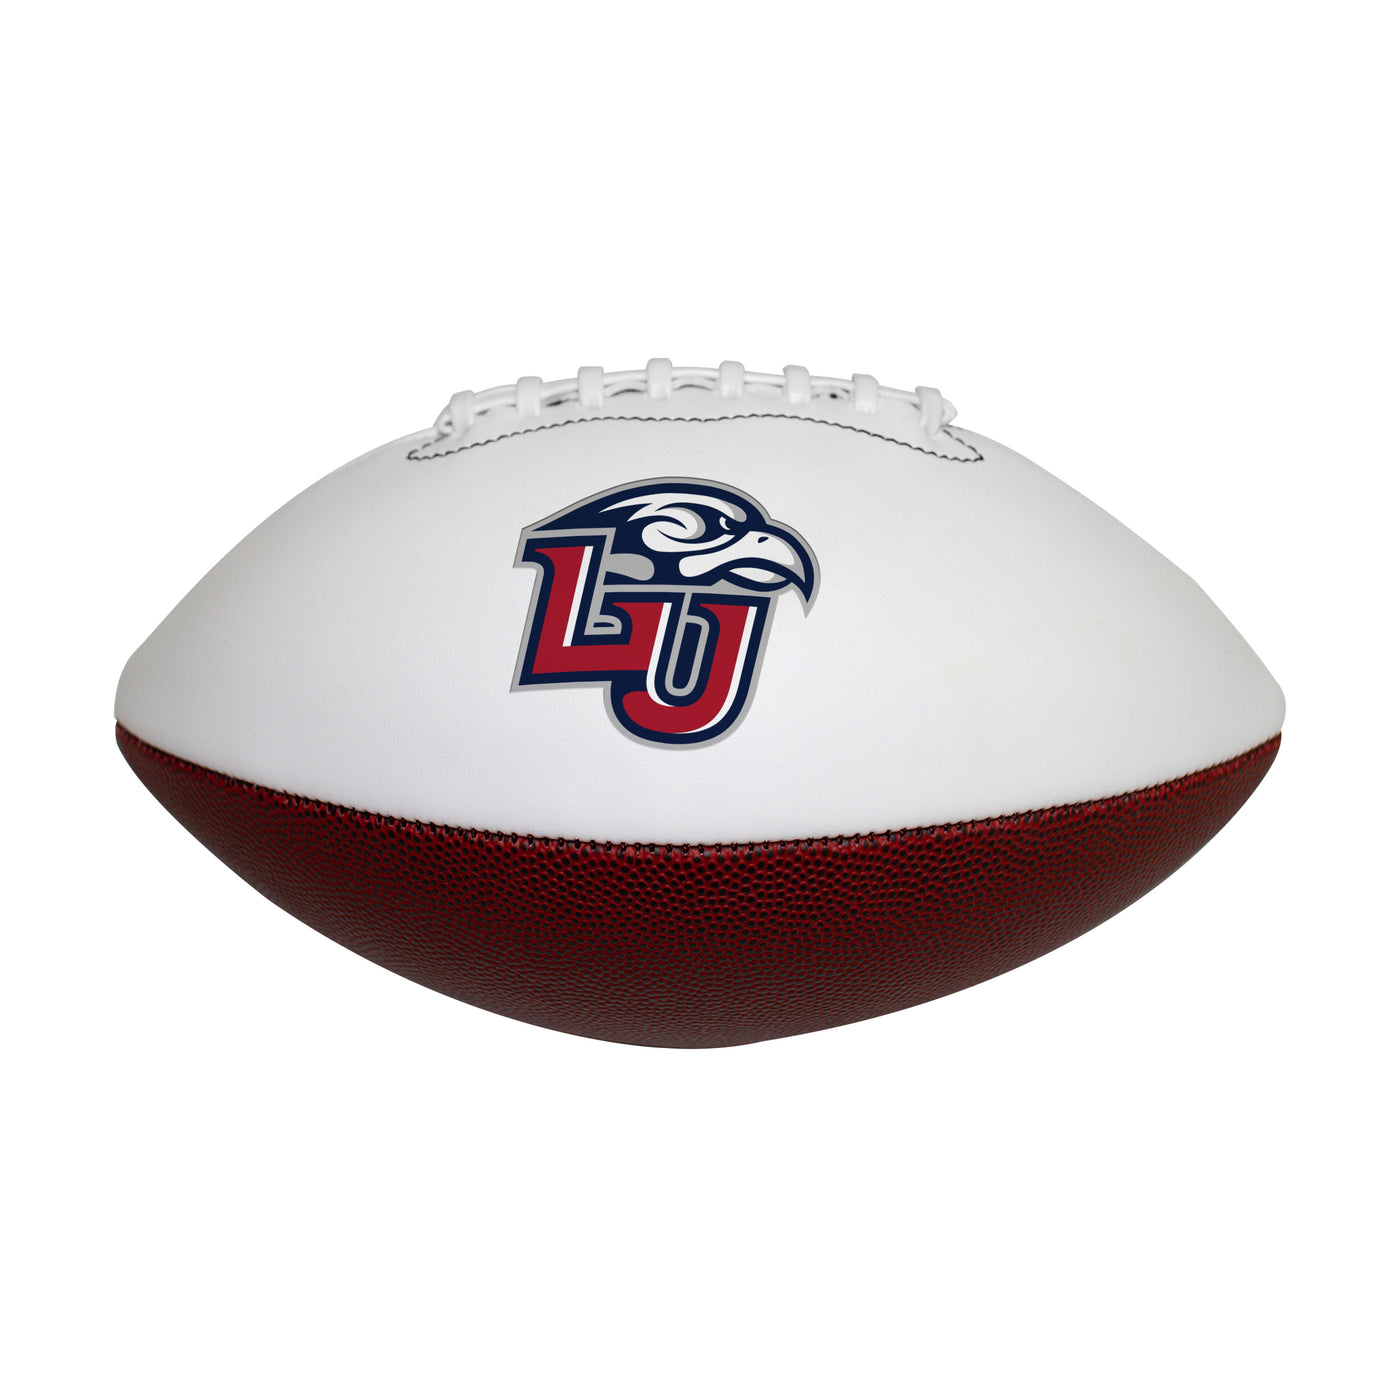 Liberty Univ Official-Size Autograph Football